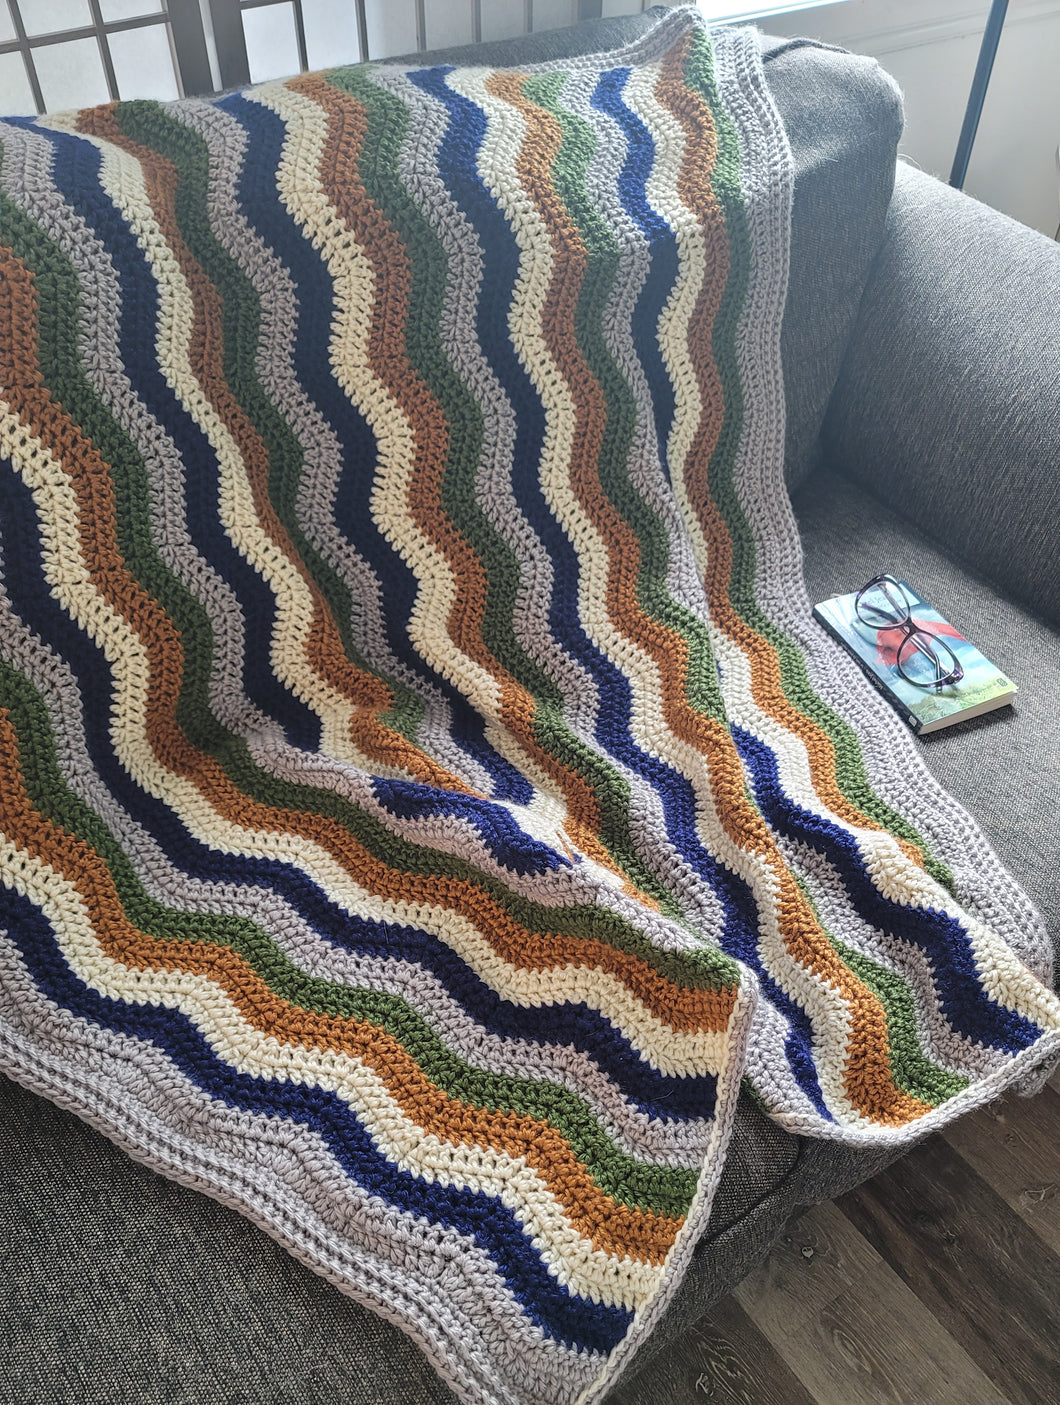 Boreal Throw PDF Crochet Pattern by Julie Desjardins